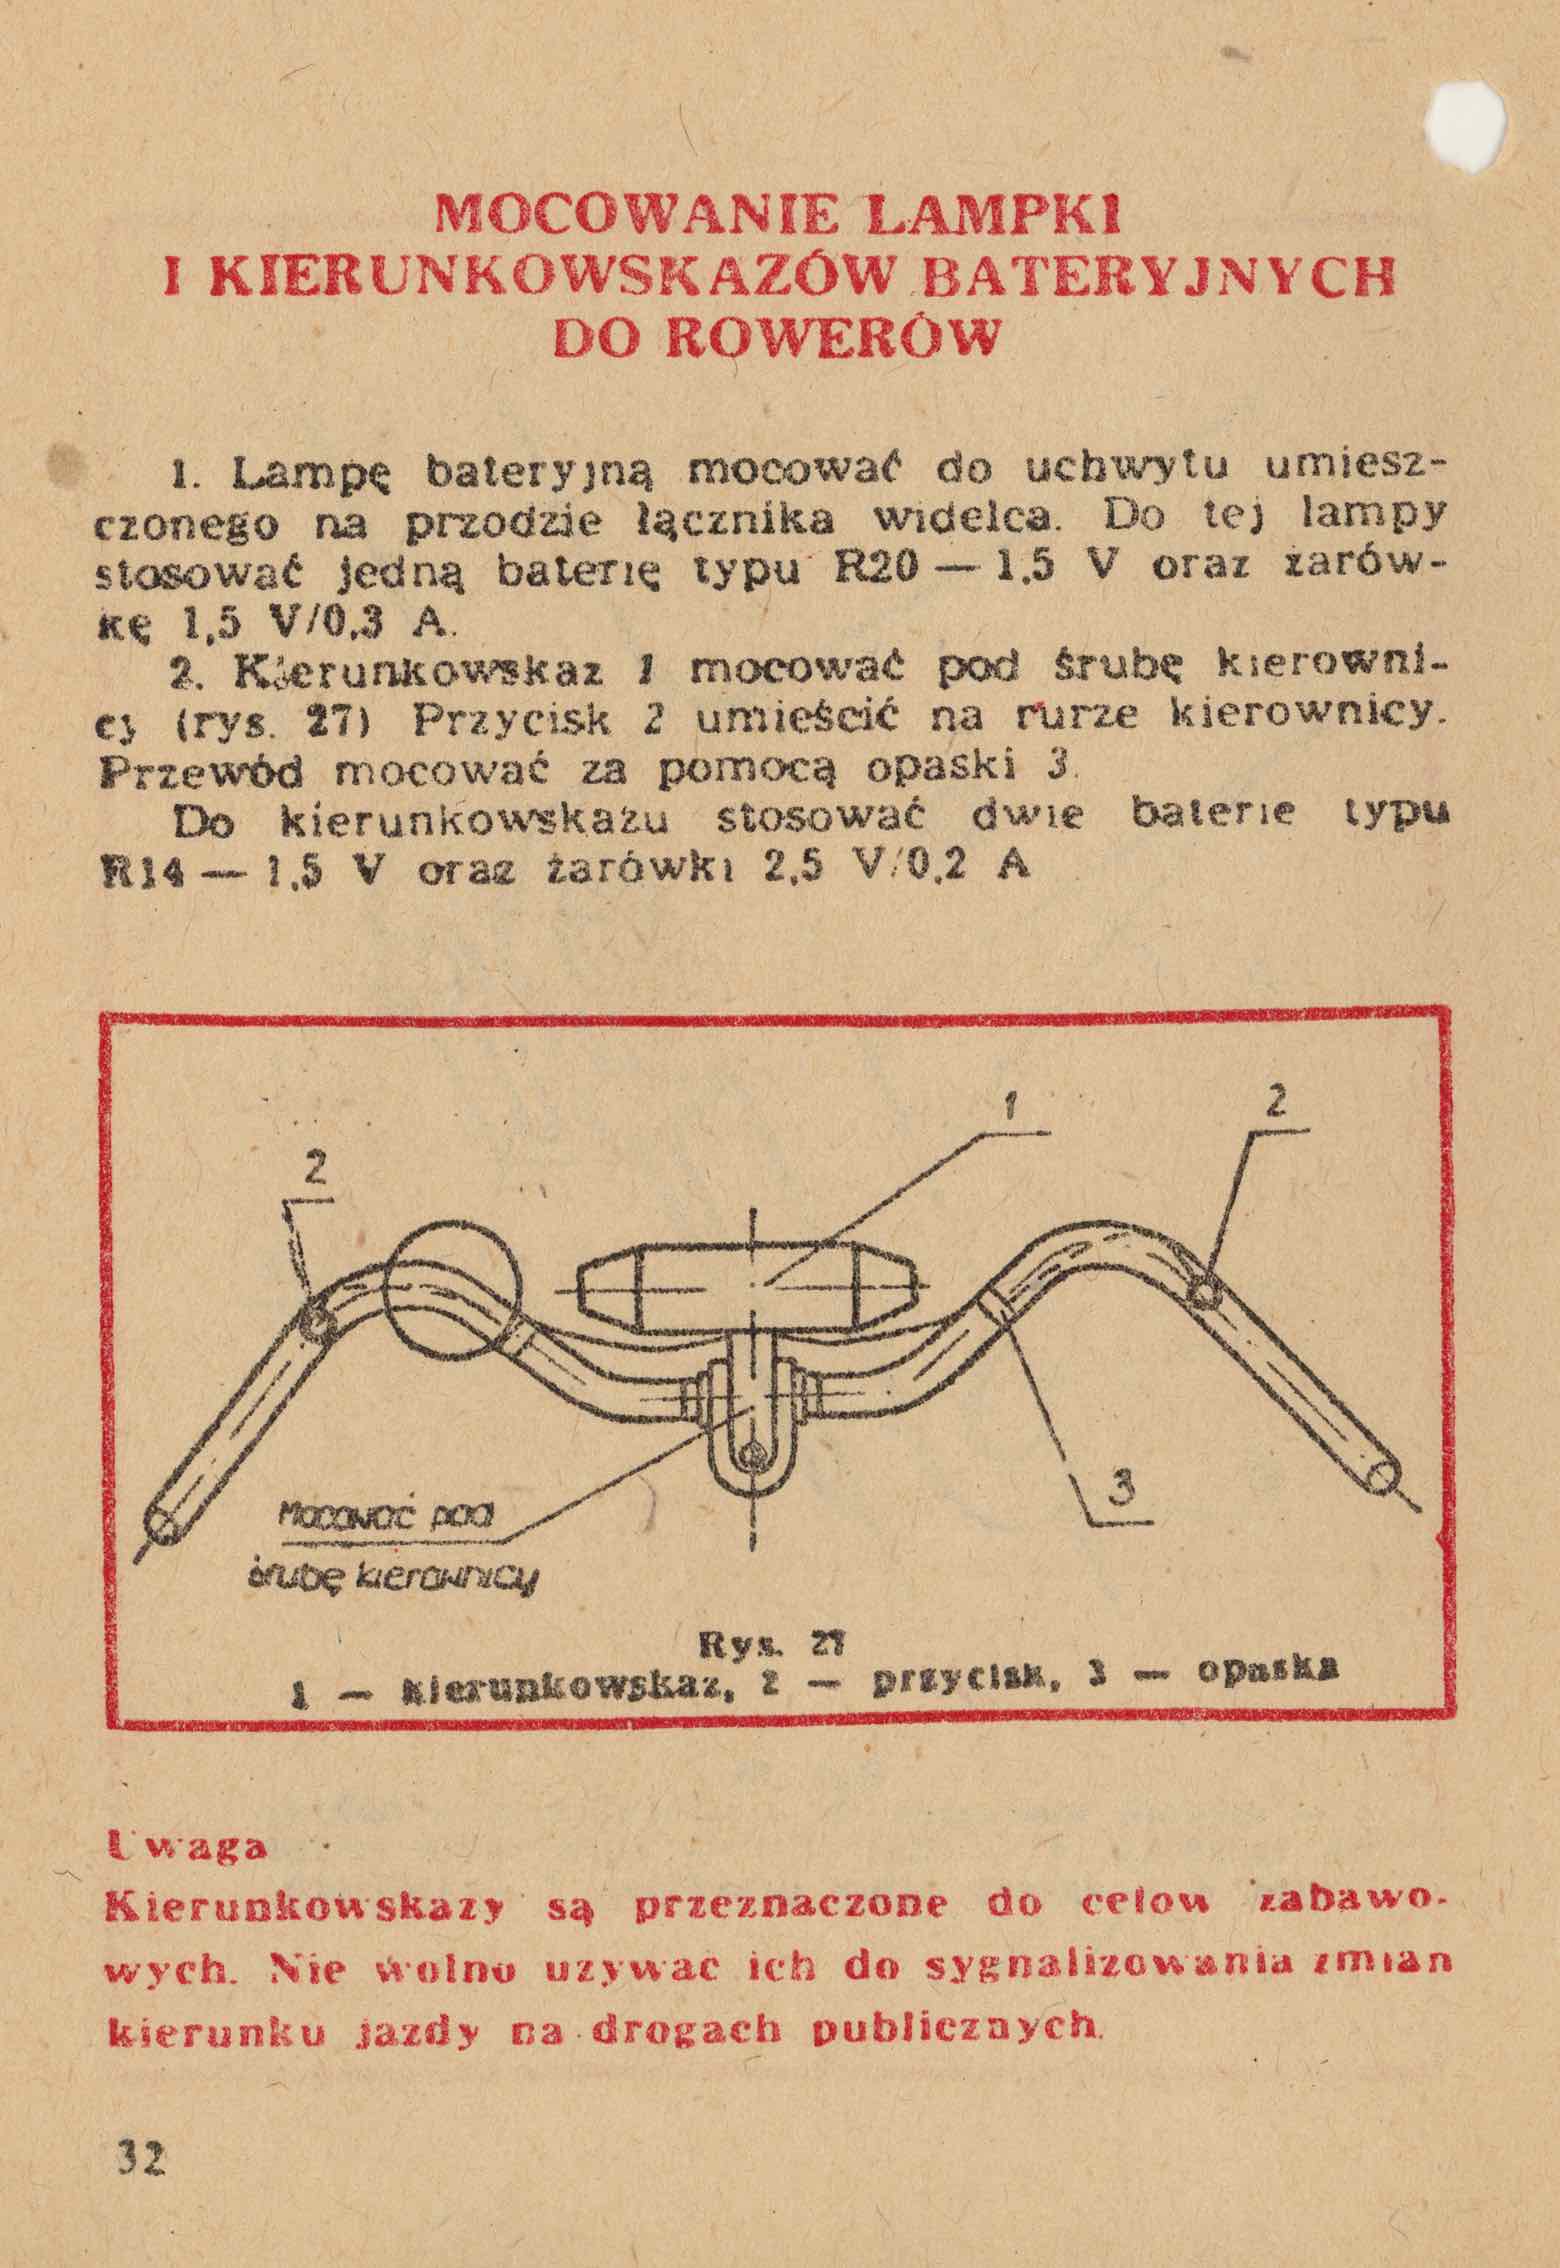 Romet - Rowery Instrukcja Obslugi 1979 page 32 main image